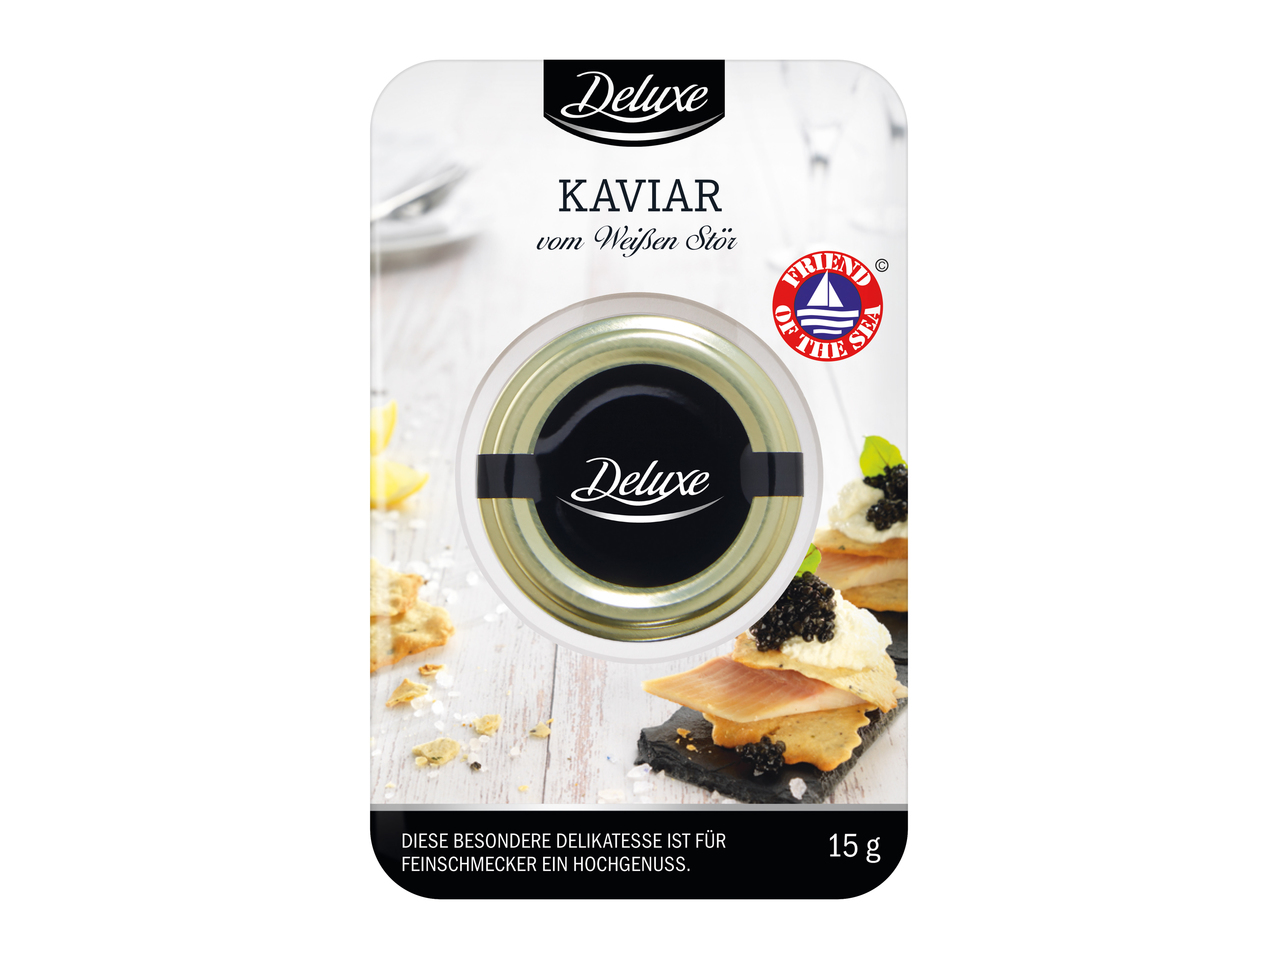 Kaviar